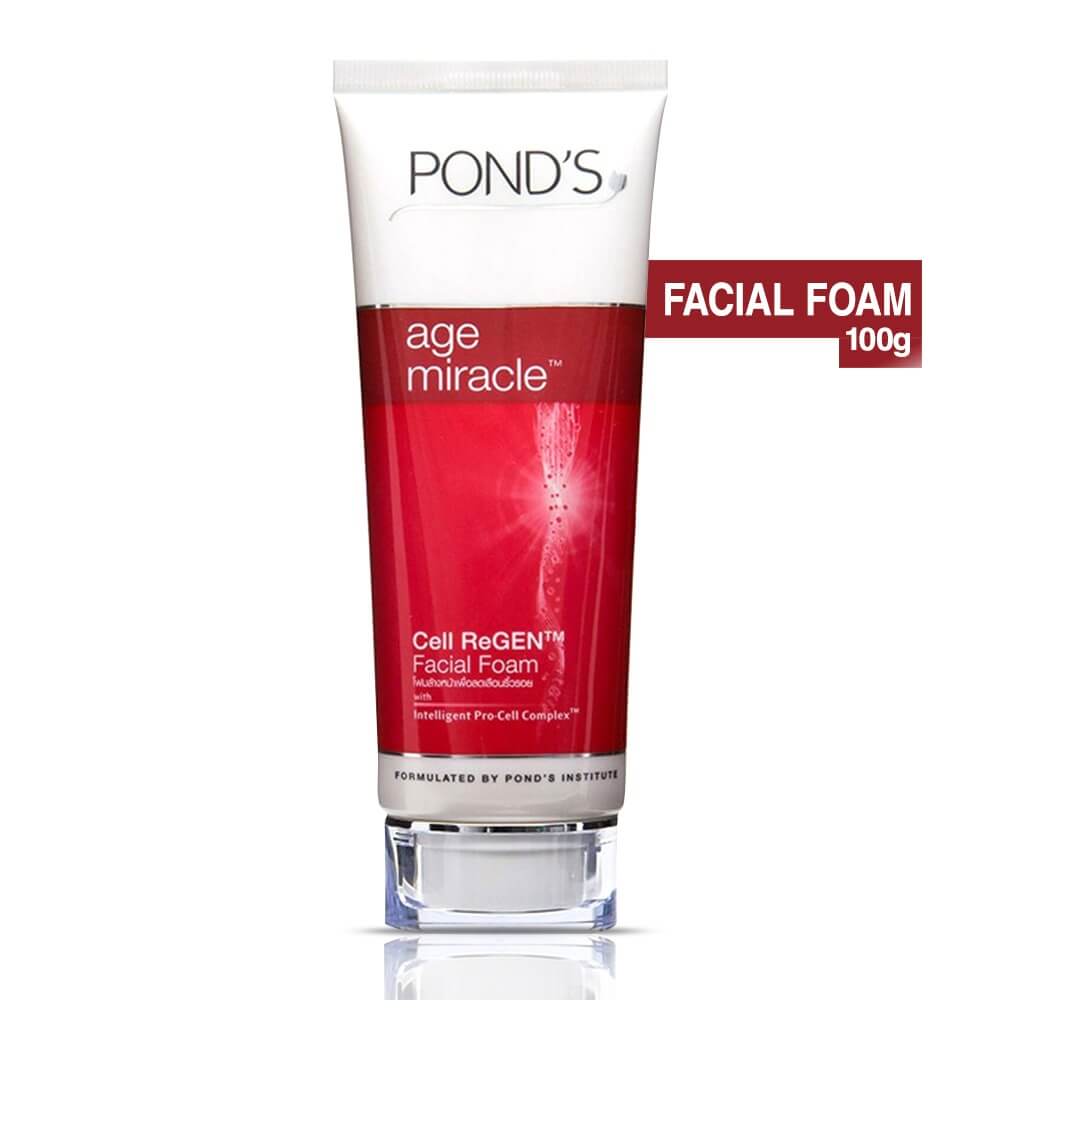 Pond Age Miracle Cell ReGen Facial Foam 100g